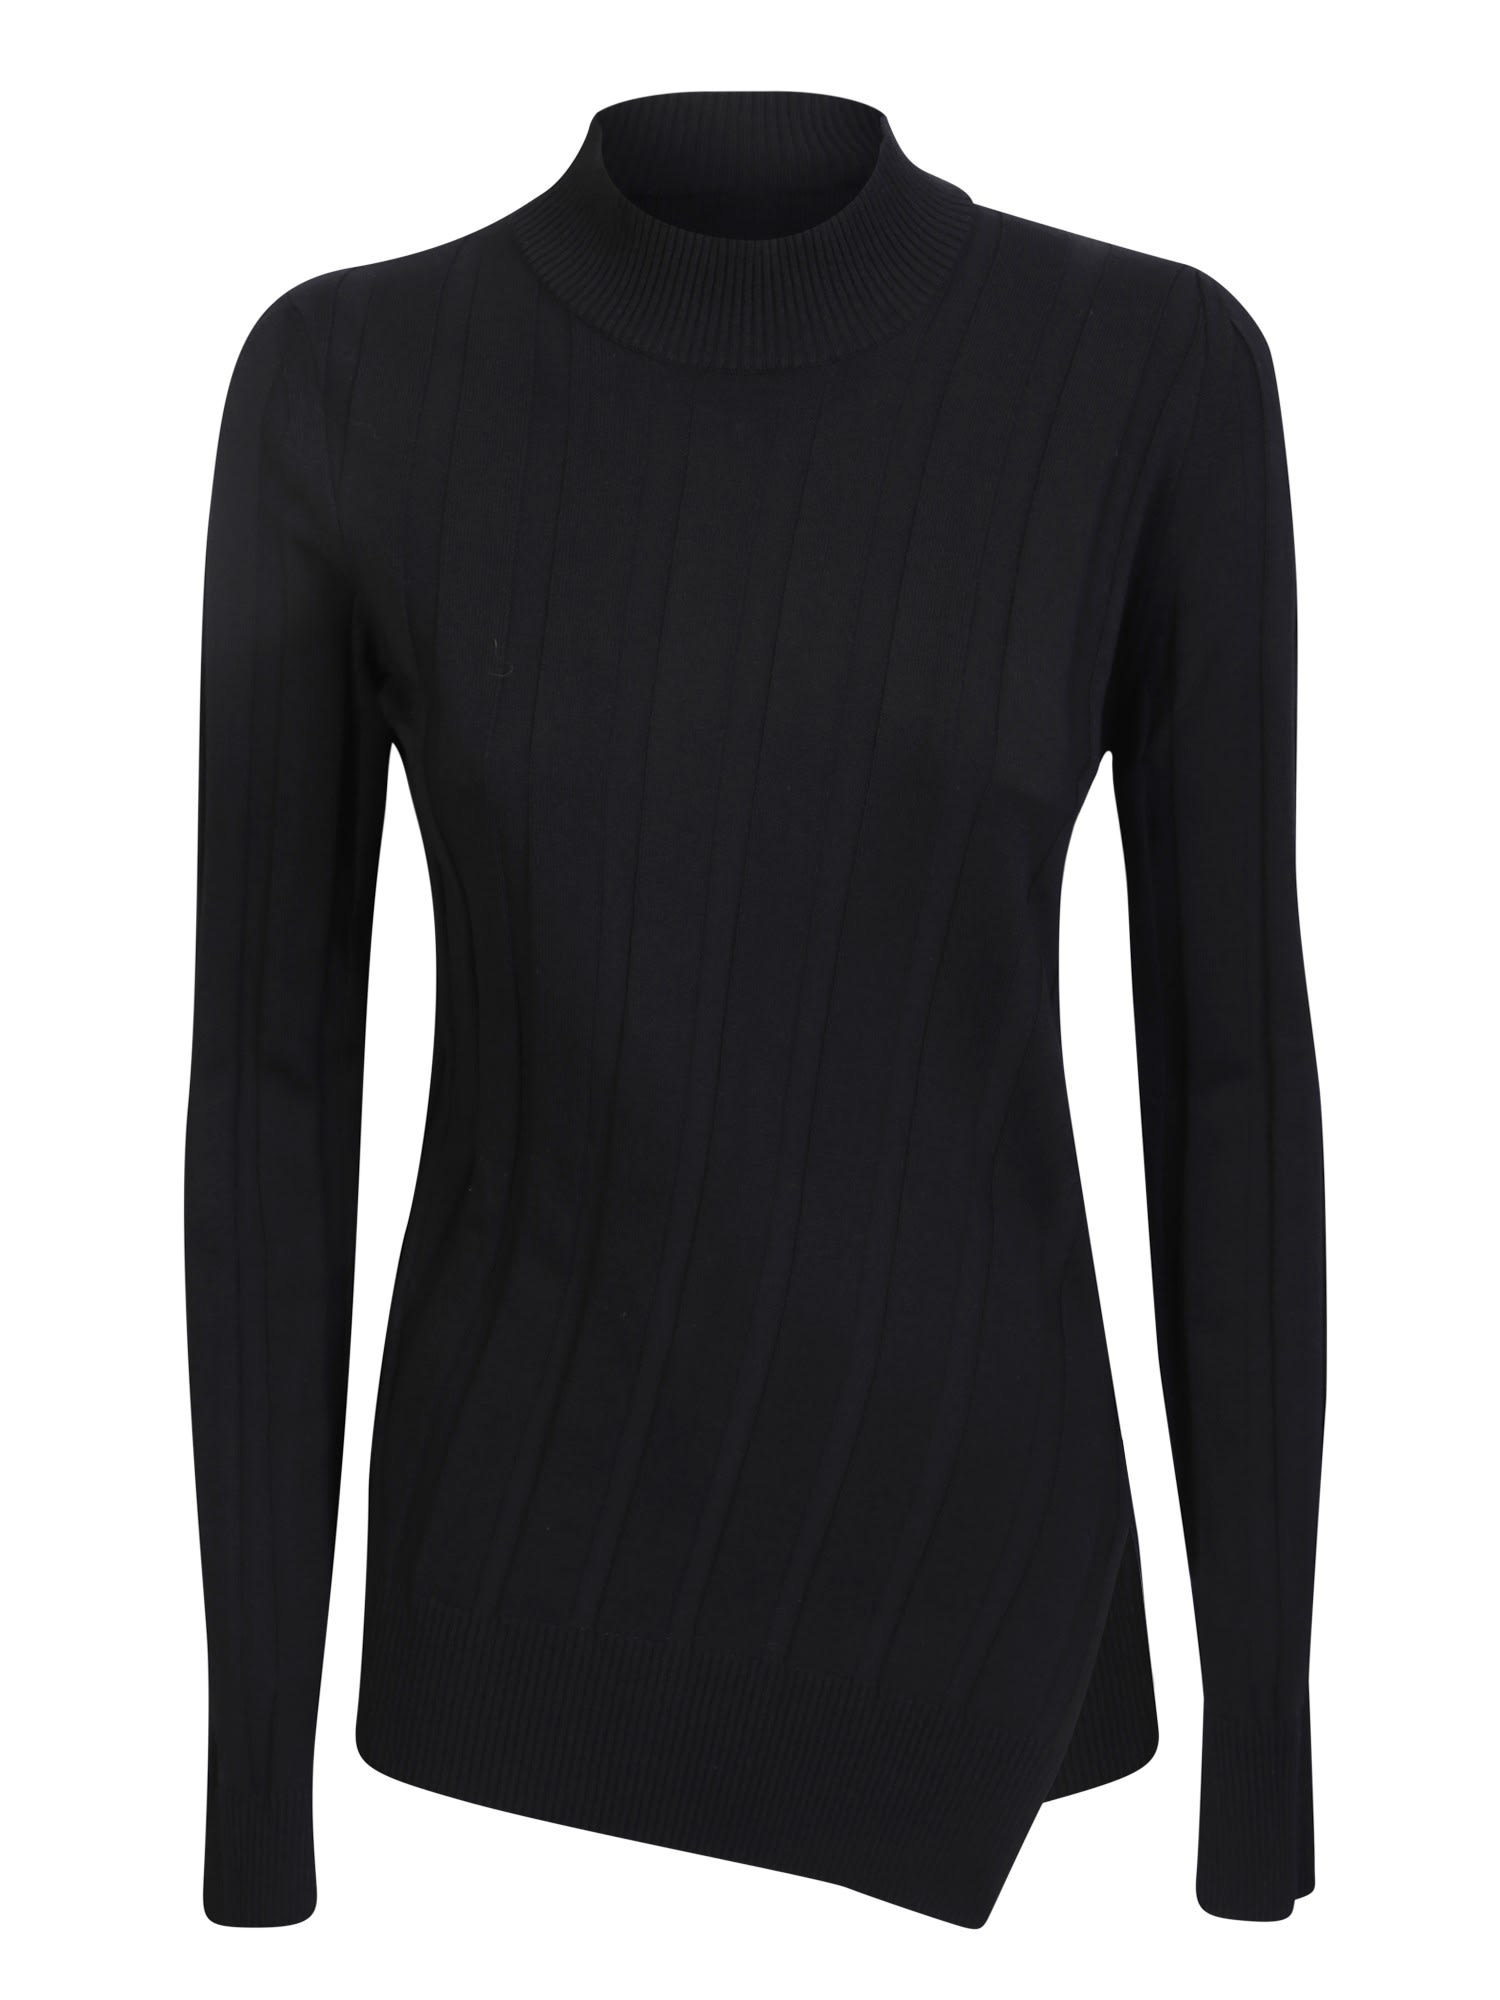 Stella McCartney Asymmetrical Black Ribbed Shirt